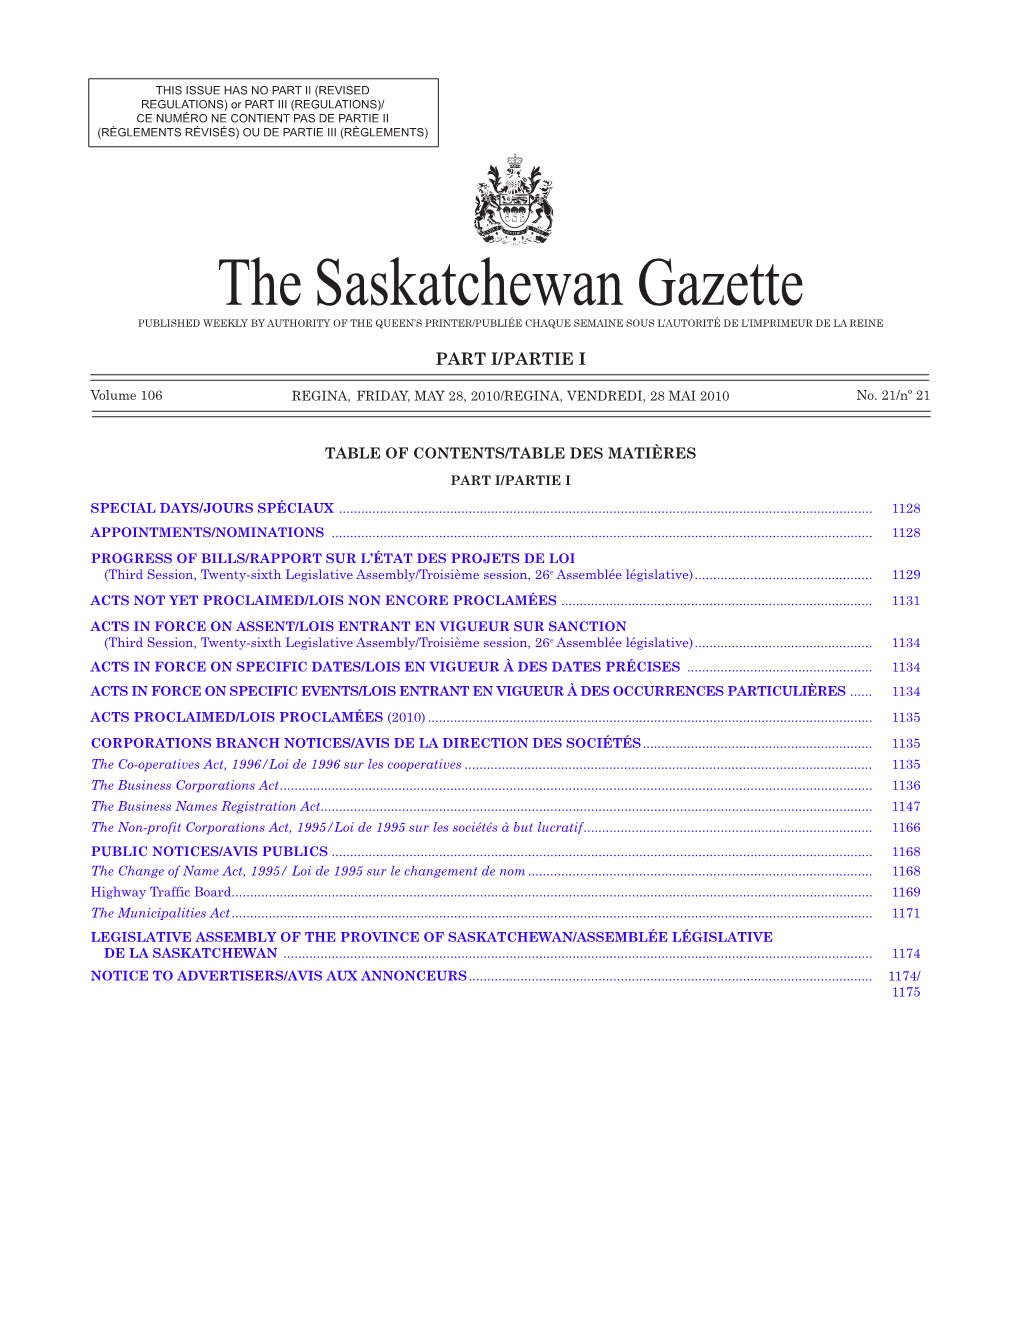 Sask Gazette, Part I, May 28, 2010